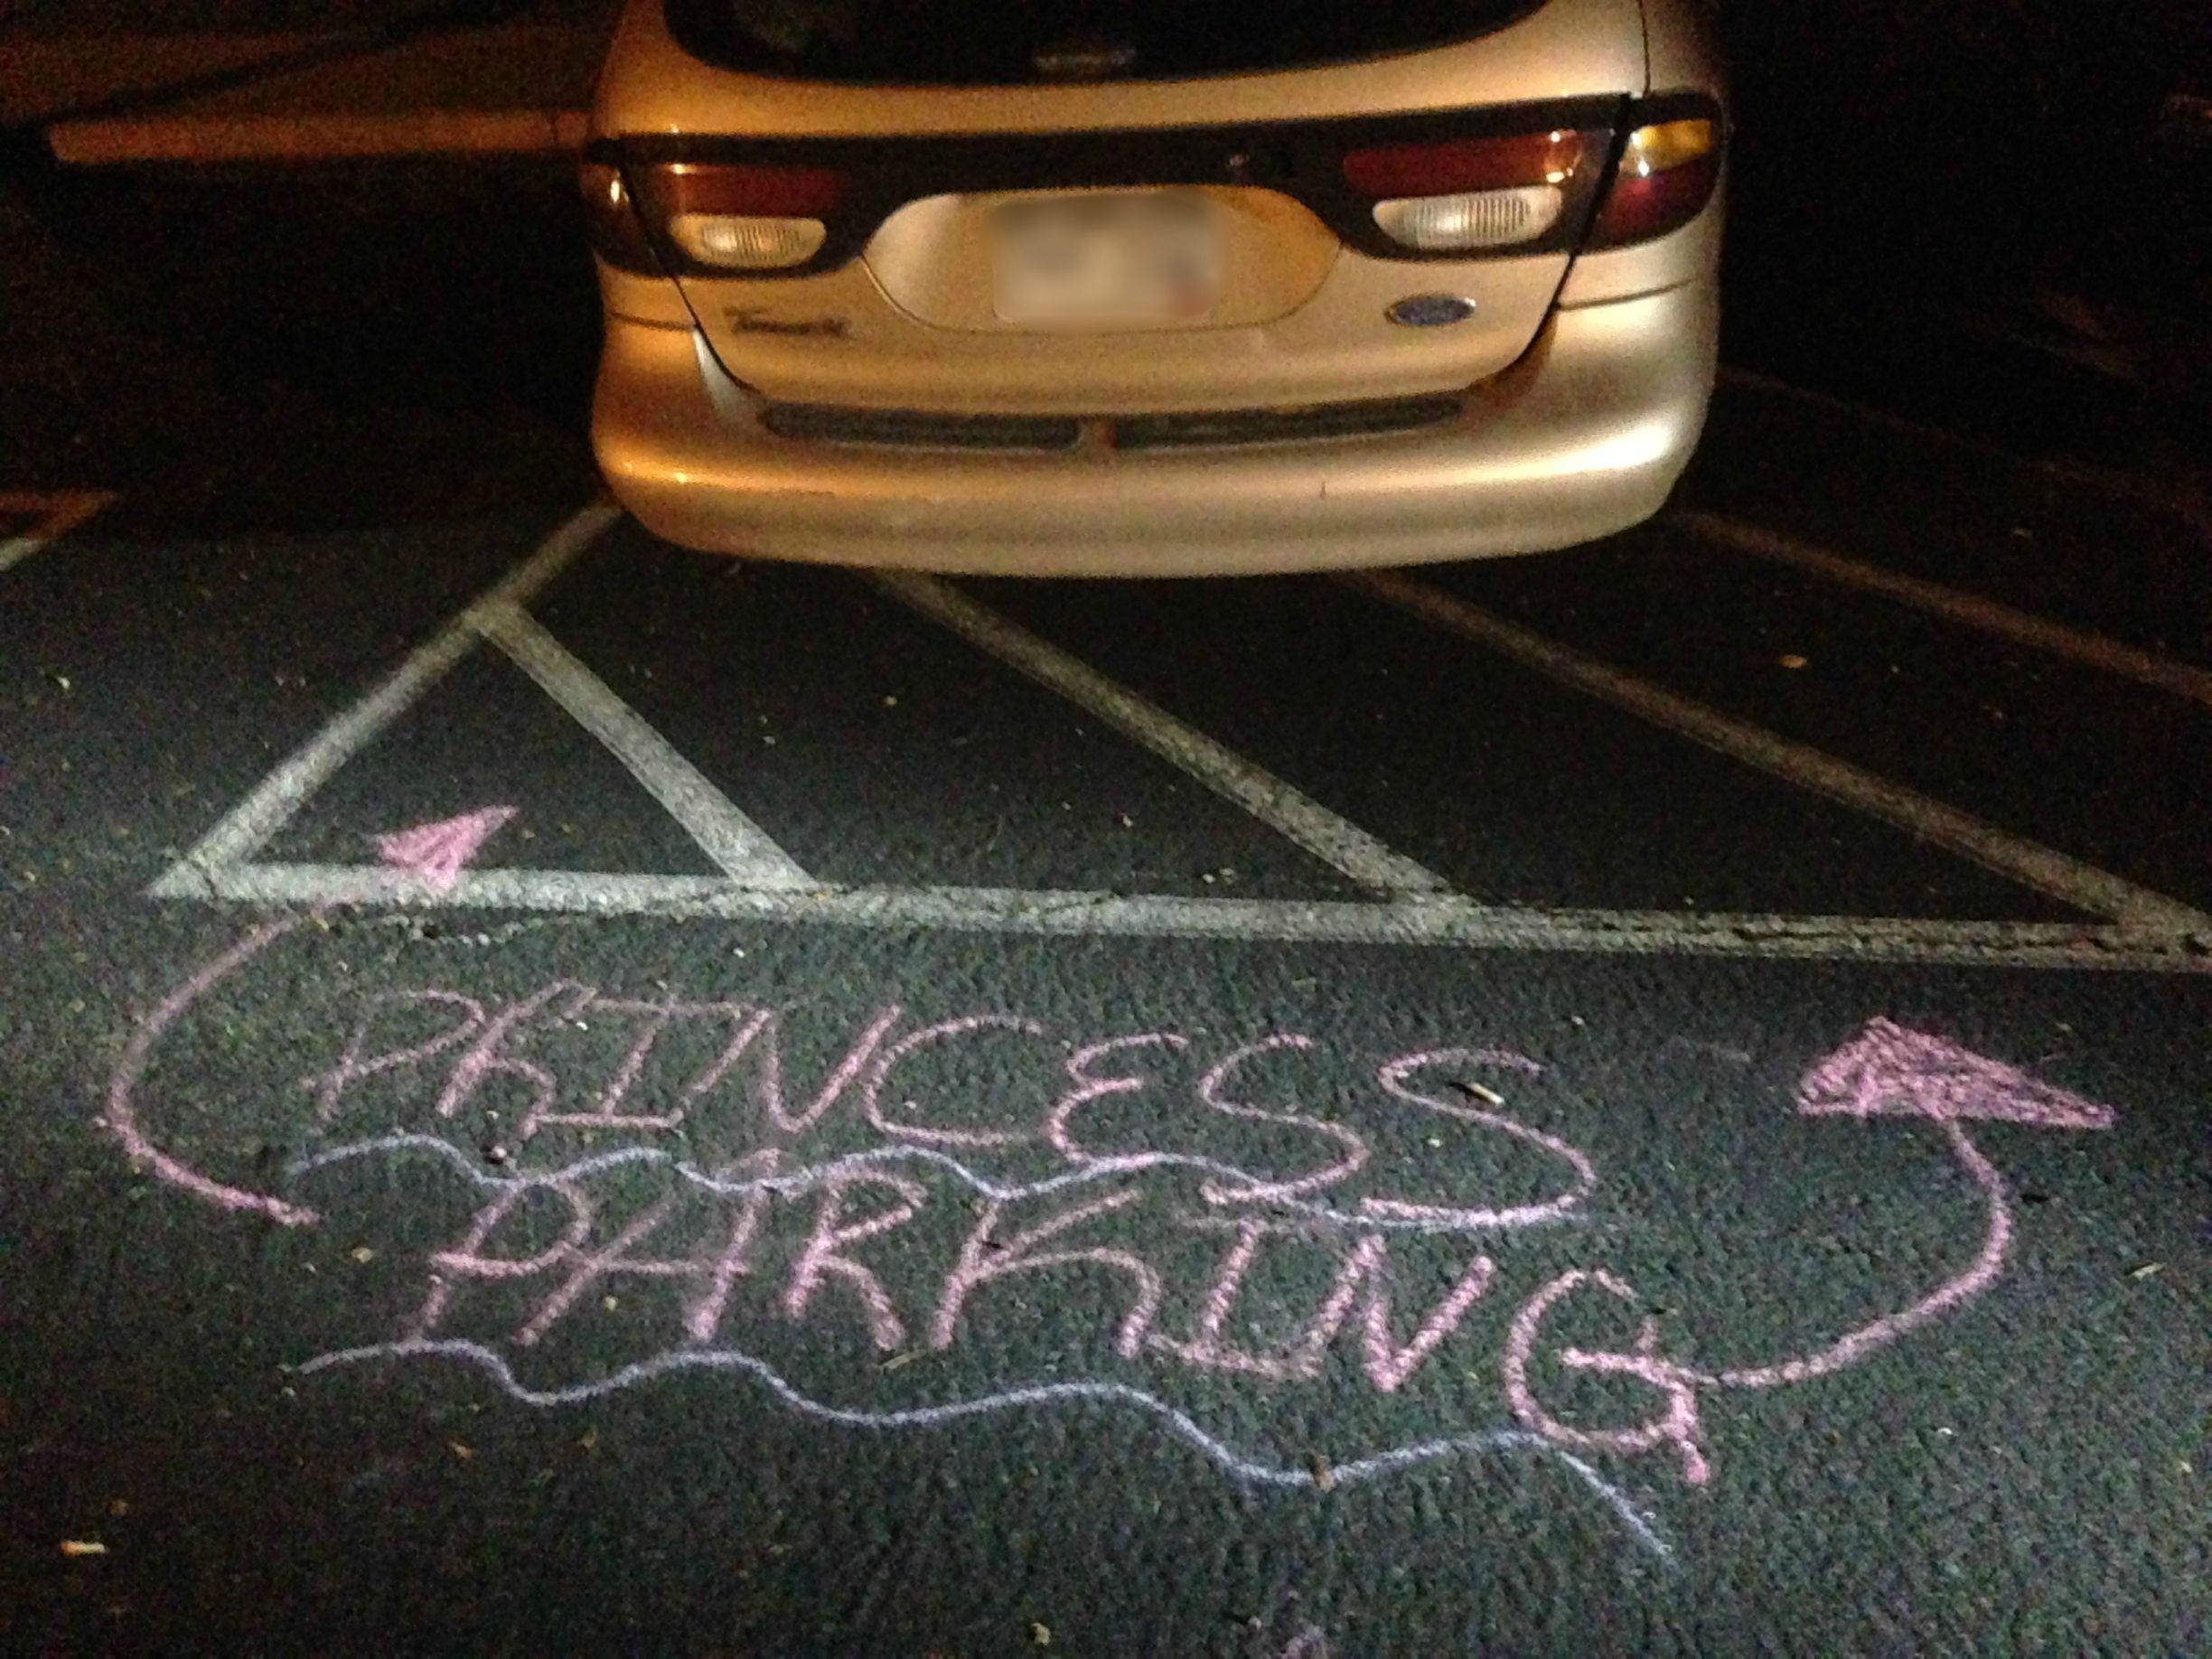 My friend parked like a d-bag. The neighbor kids left him a message.